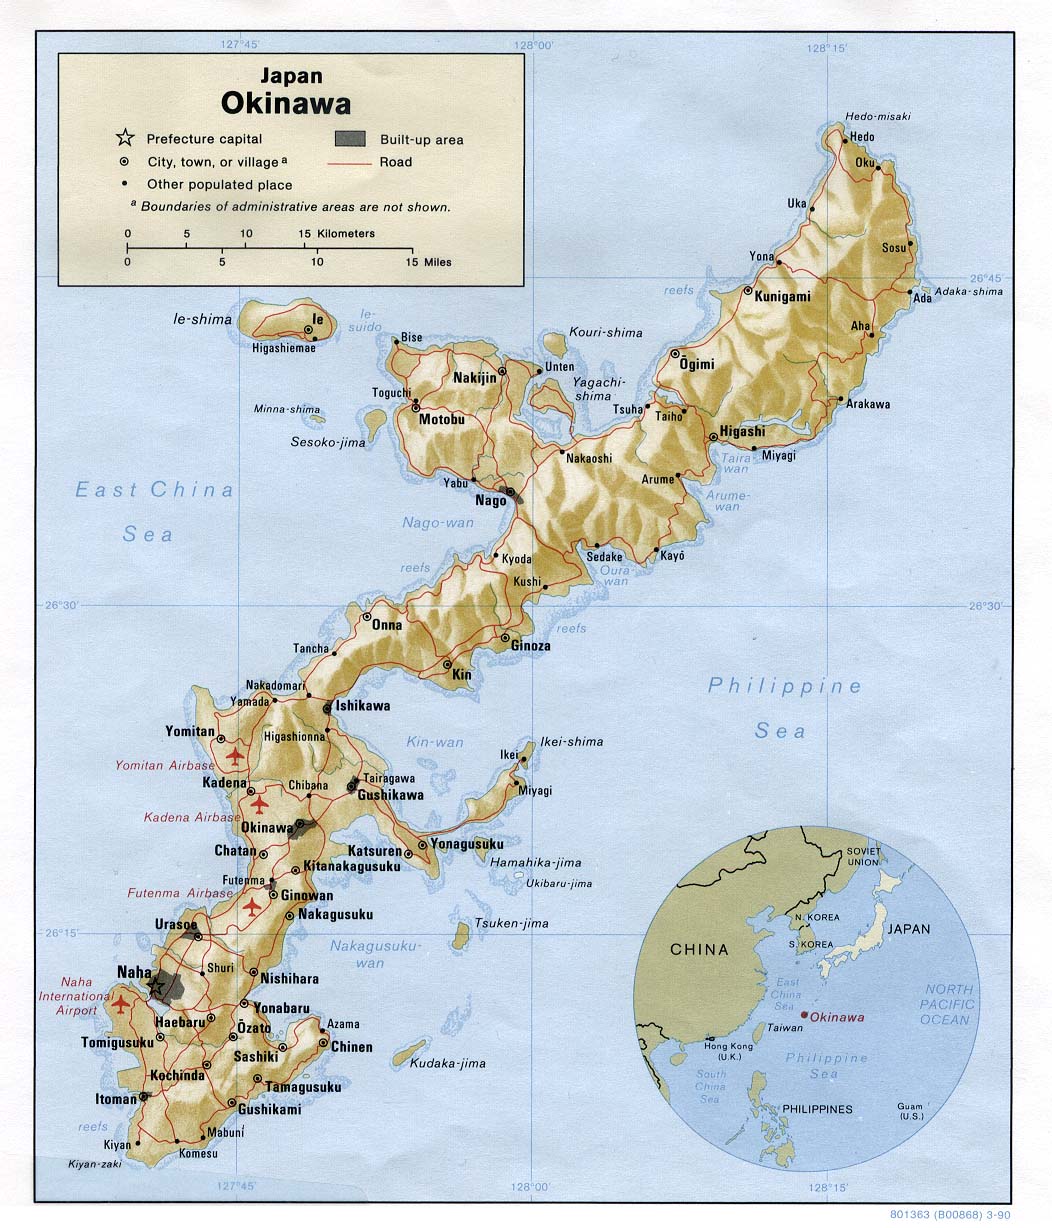 Okinawa_relief_Map_1990